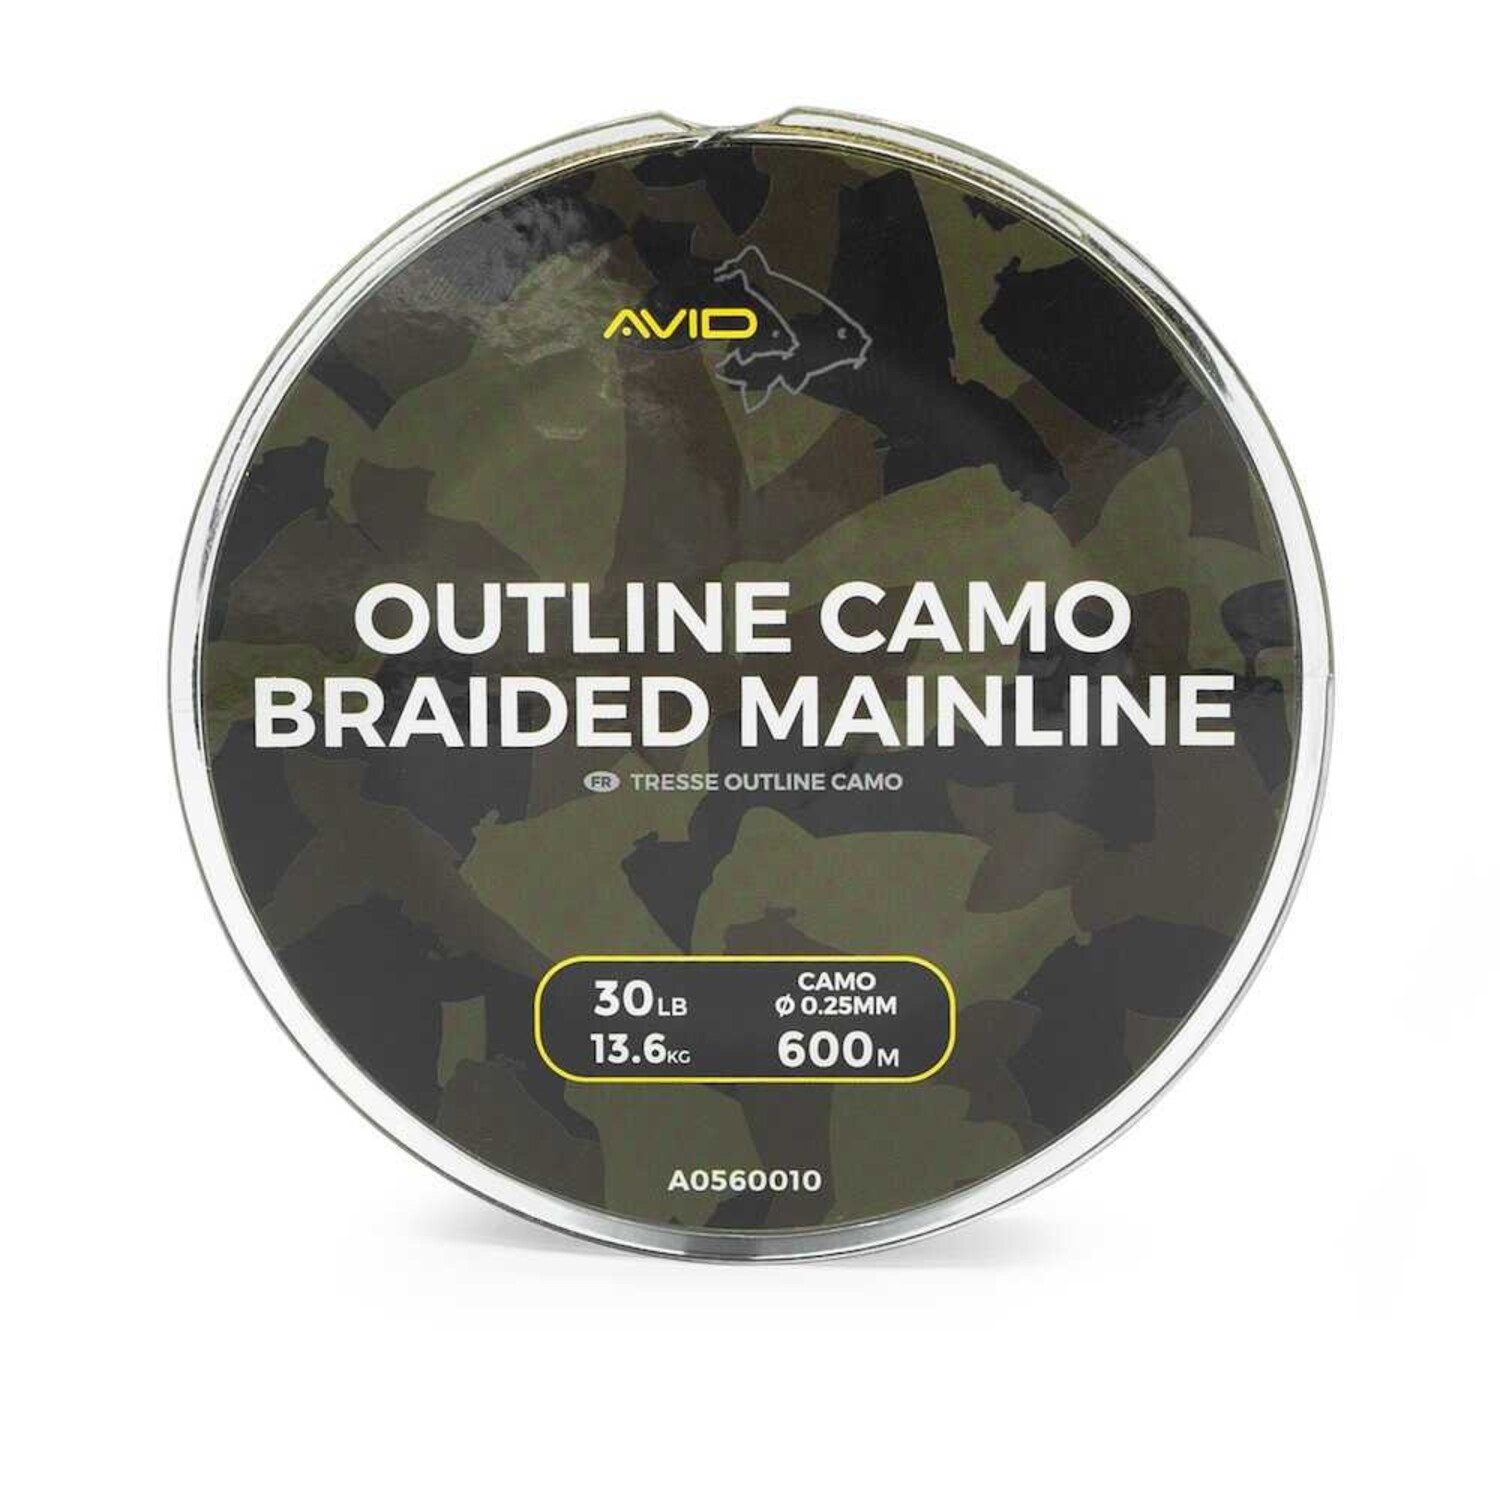 Avid Carp Outline Camo Braided Mainline 300m 30lb - Reniers Fishing